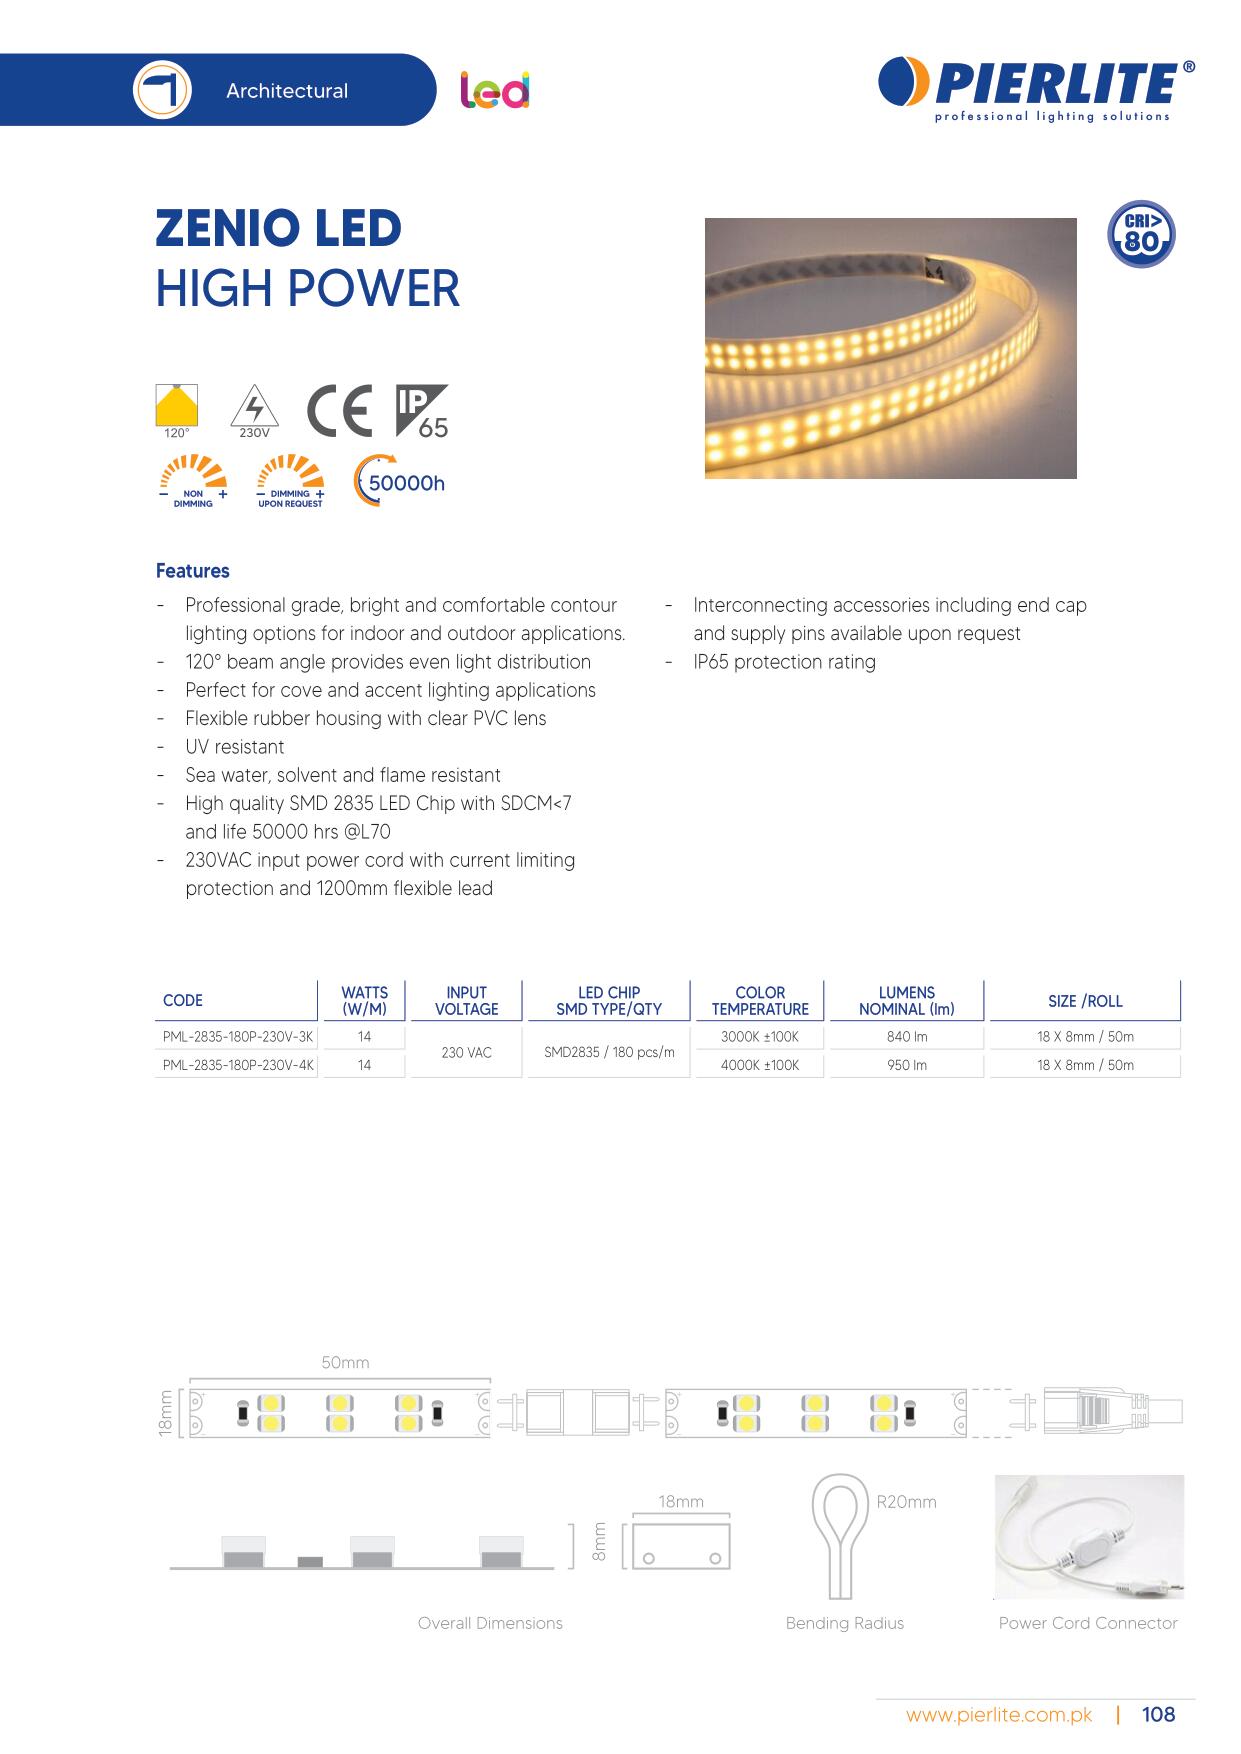 Pierlite LED Luminaire Catalog 2021-117